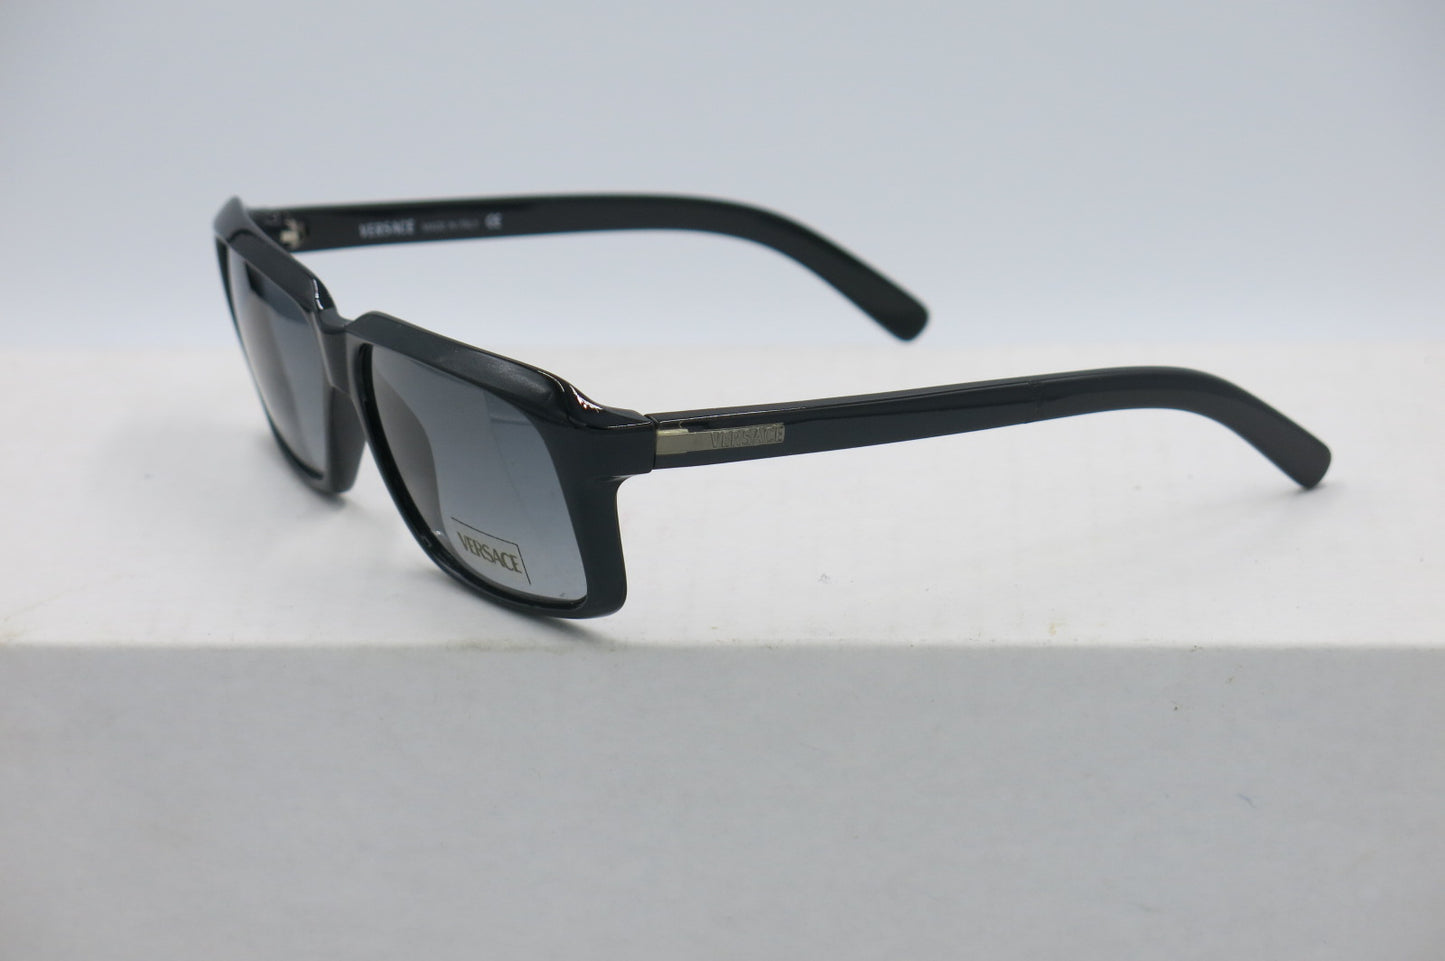 Versace Sunglasses 367 Black